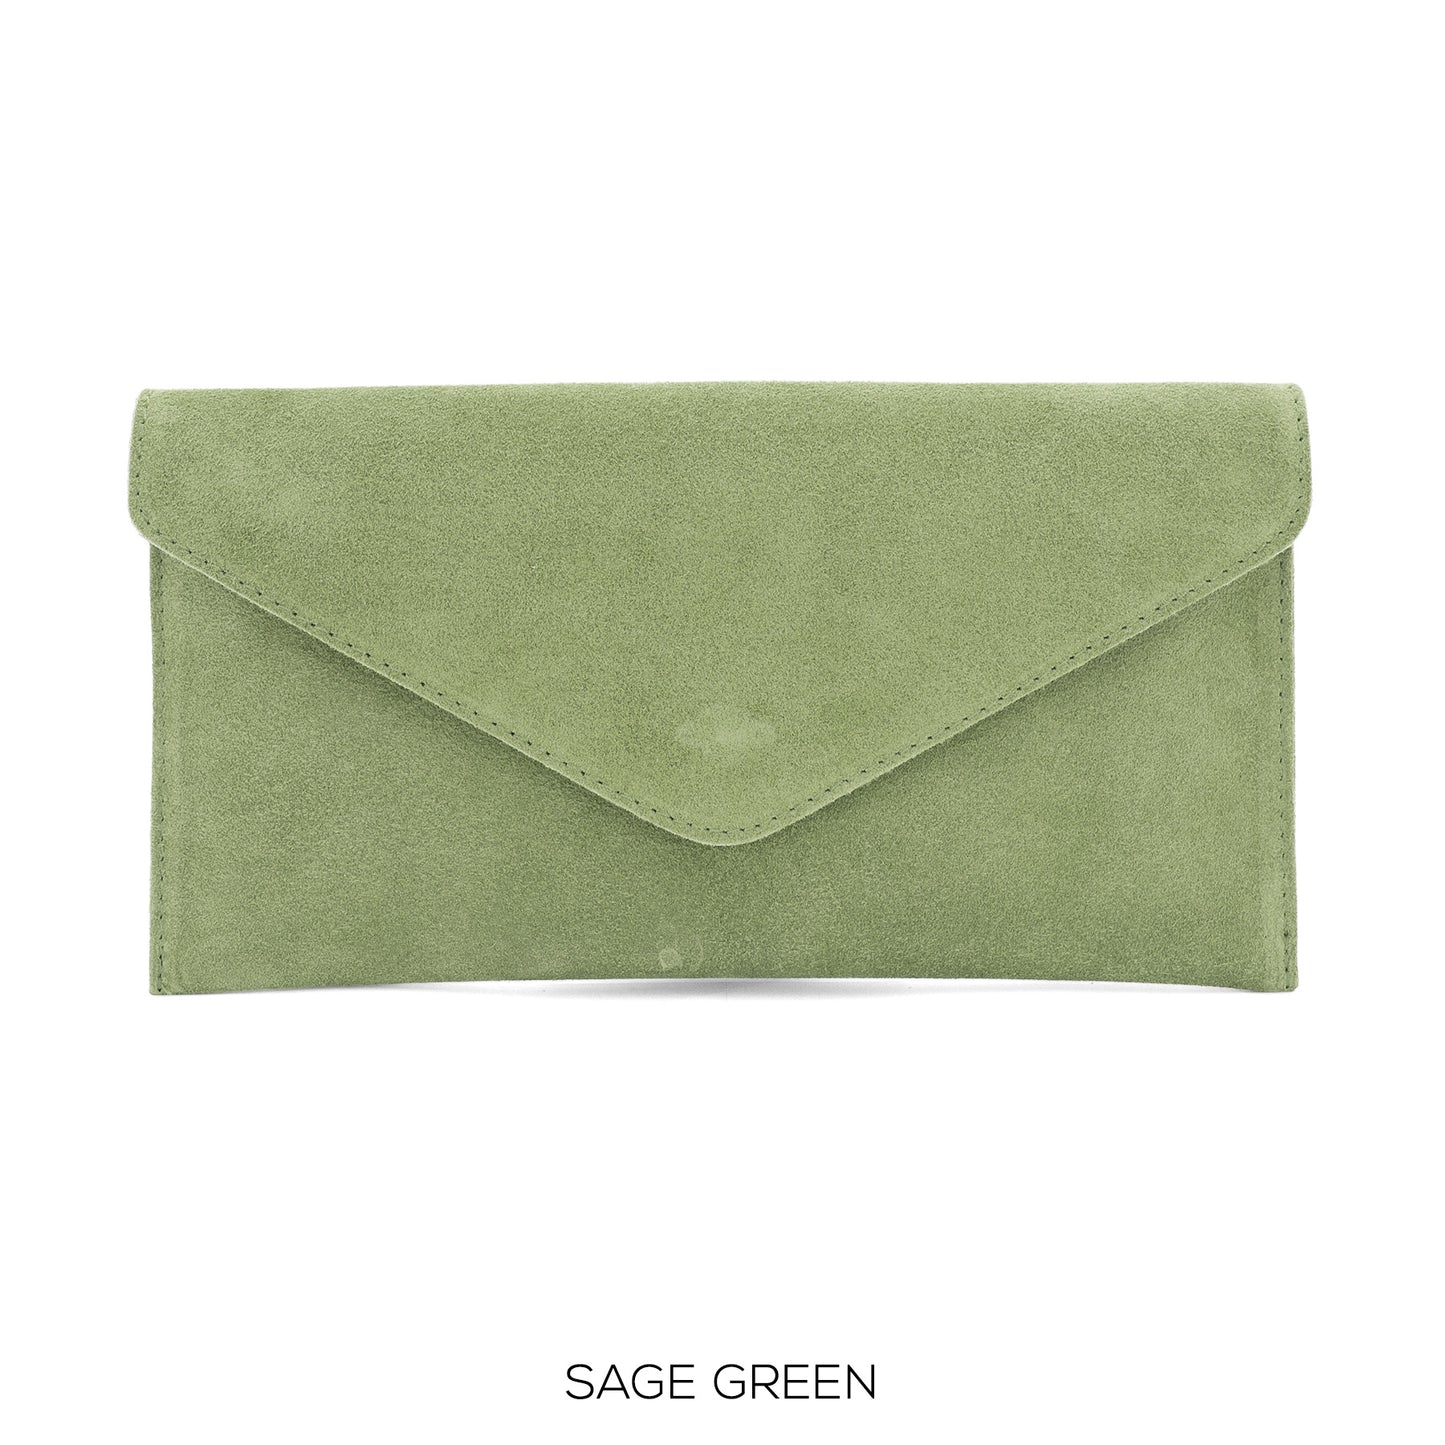 Moda Sage Green Suede Clutch Bag